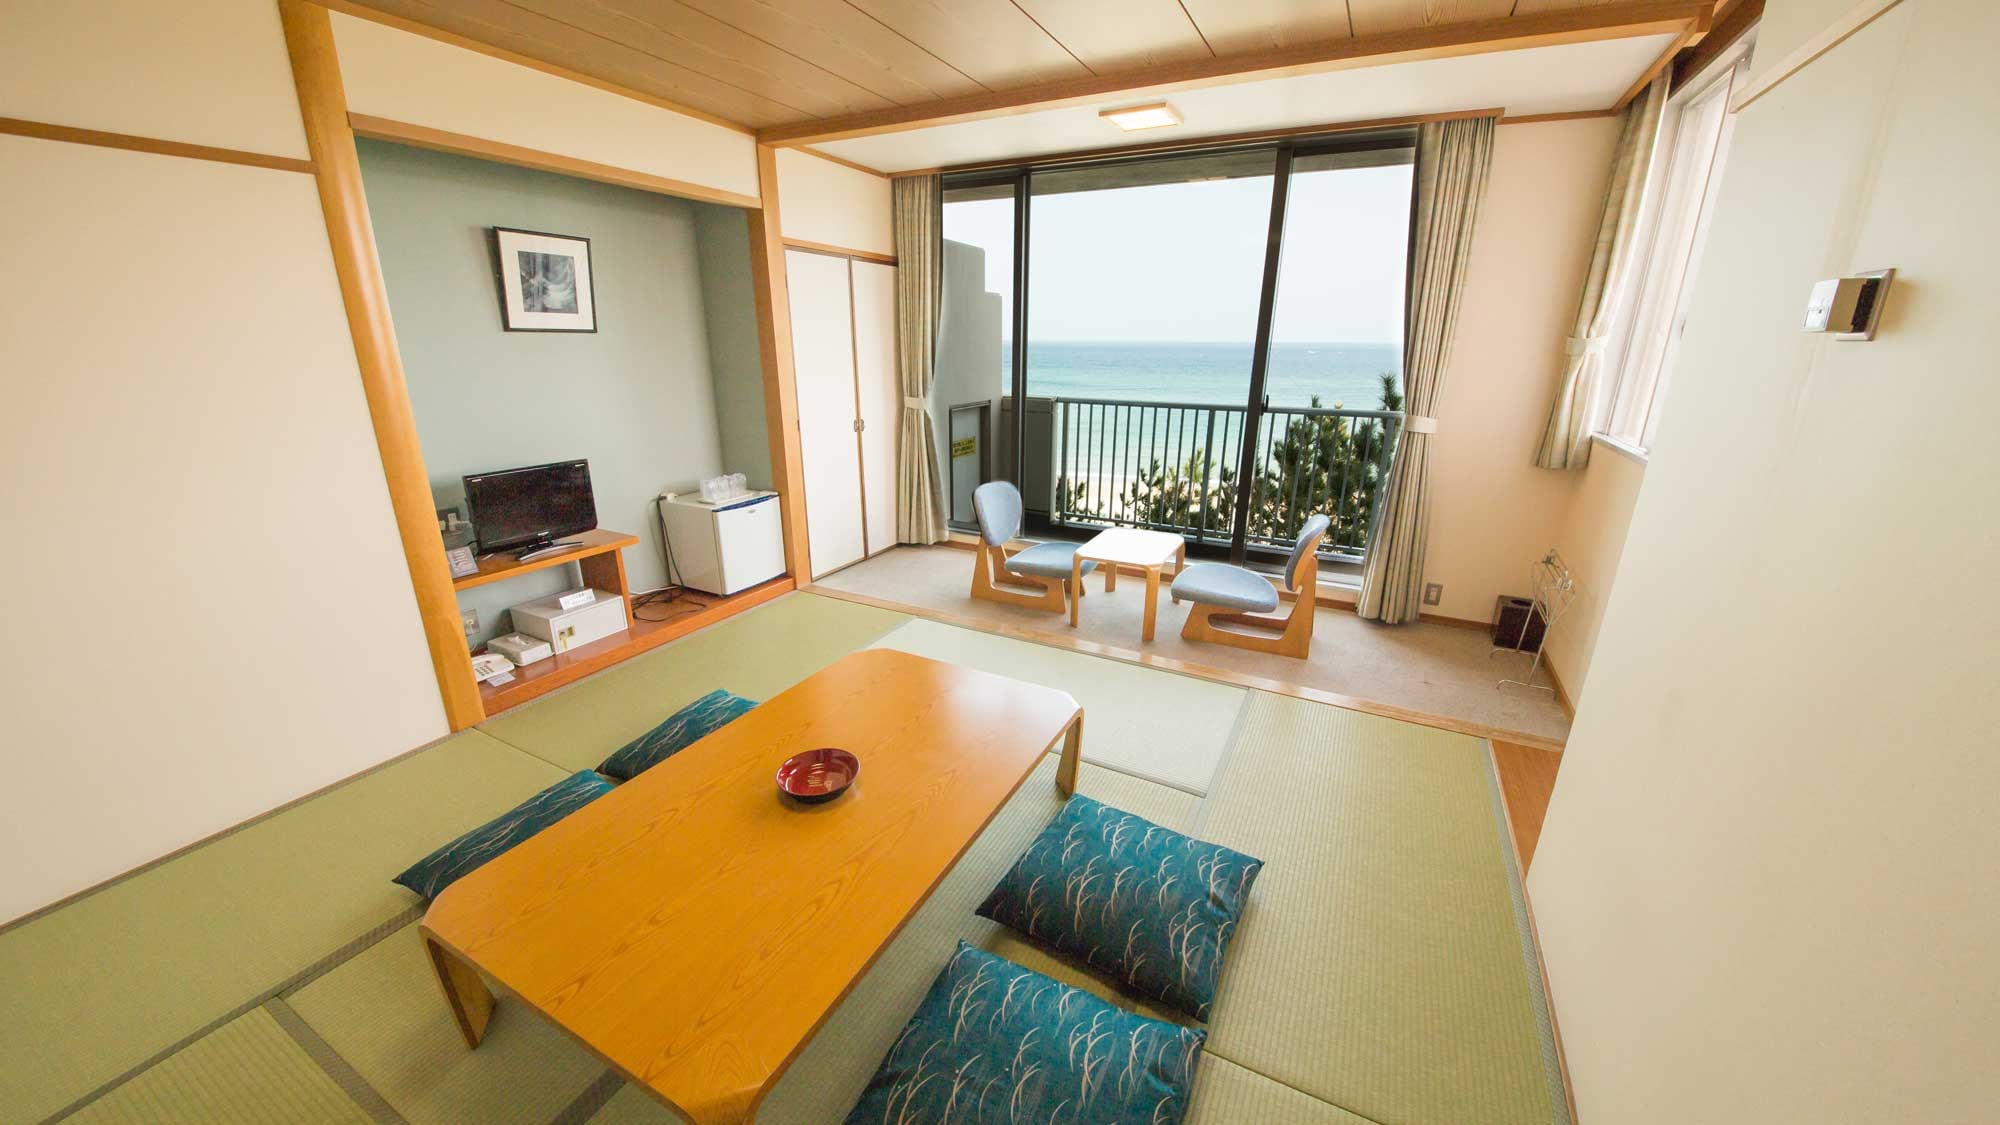 Ocean view Japanese-style room 8 tatami mats